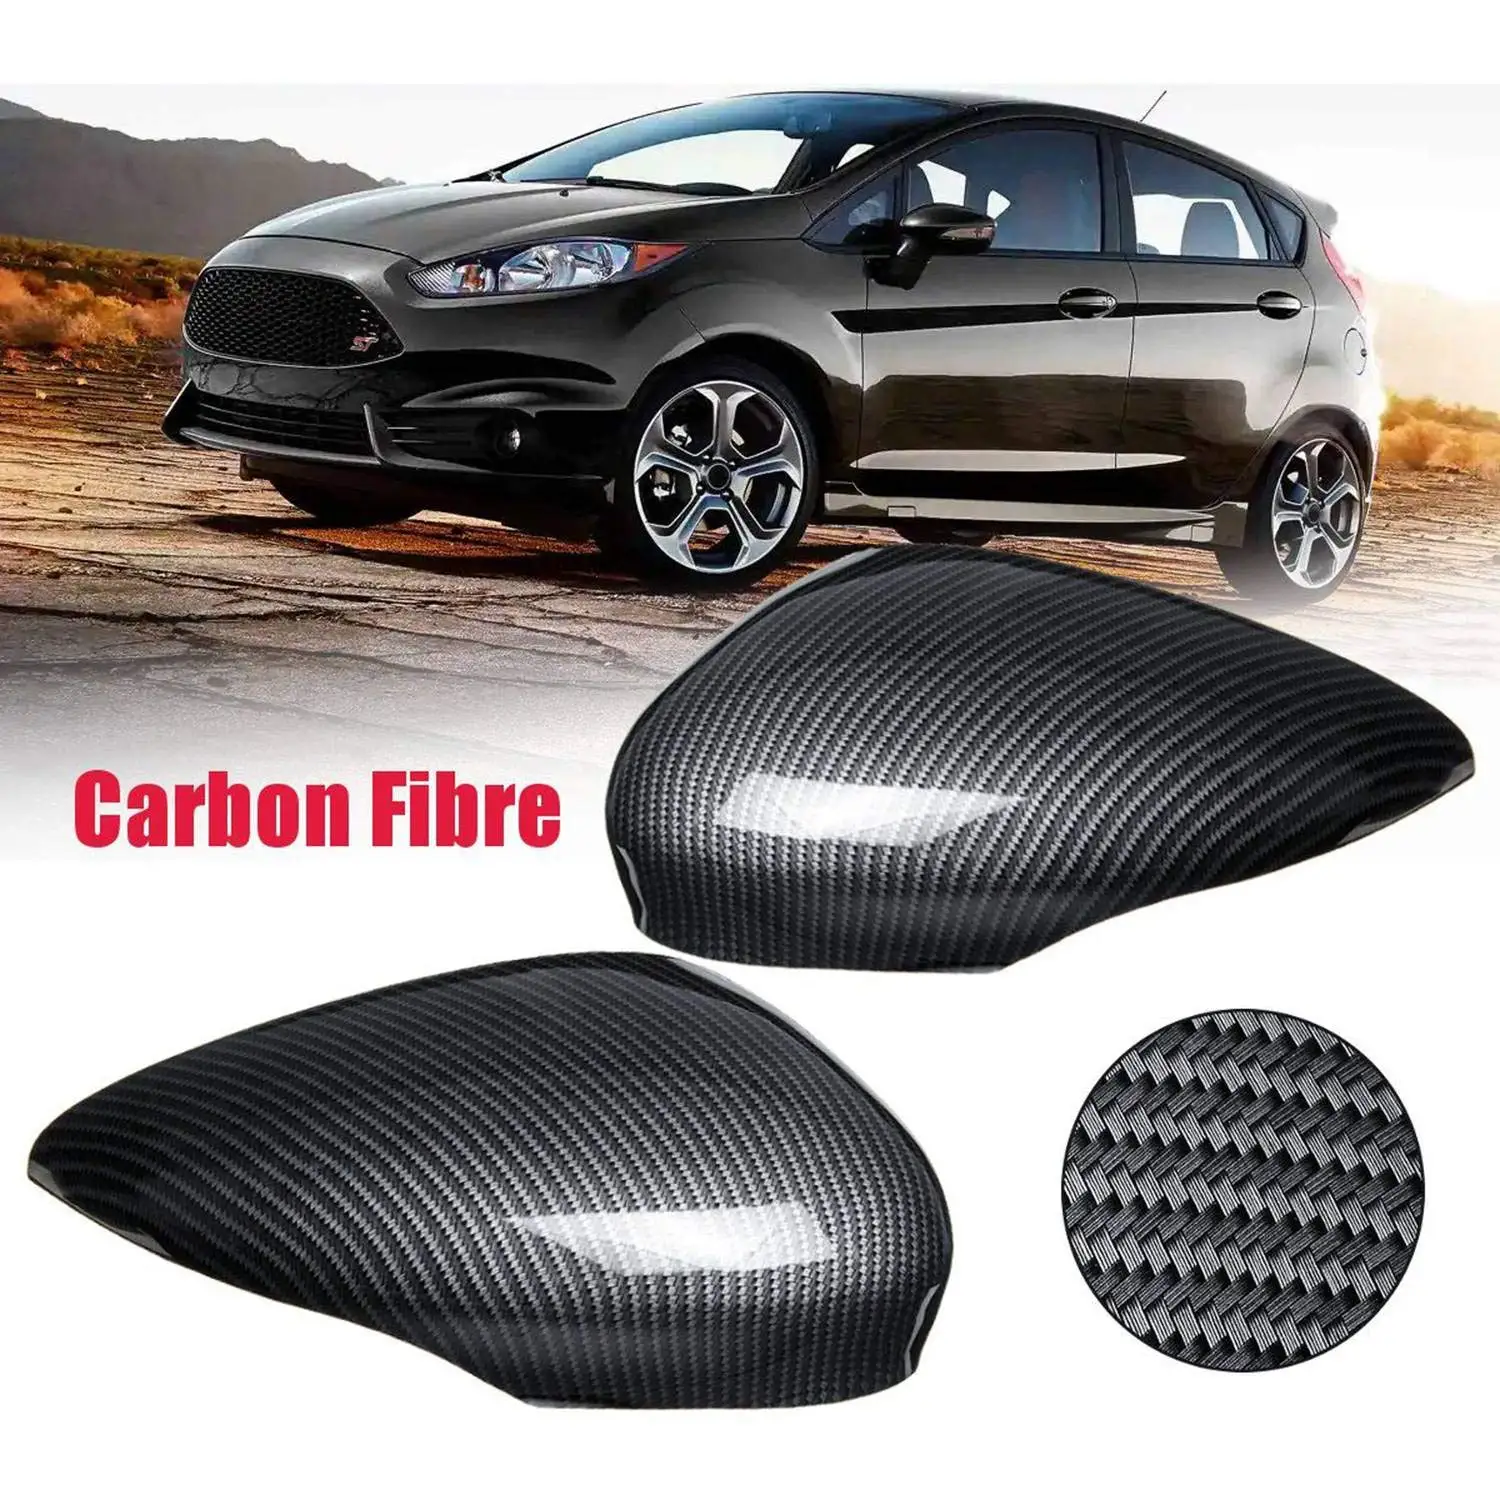 Купи Car Wing Door Carbon Fiber Rear View Mirror Cover Trim Case for for Ford Fiesta Mk7 2008 2009 2010 2011 2012 2013 2014~2017 за 1,553 рублей в магазине AliExpress